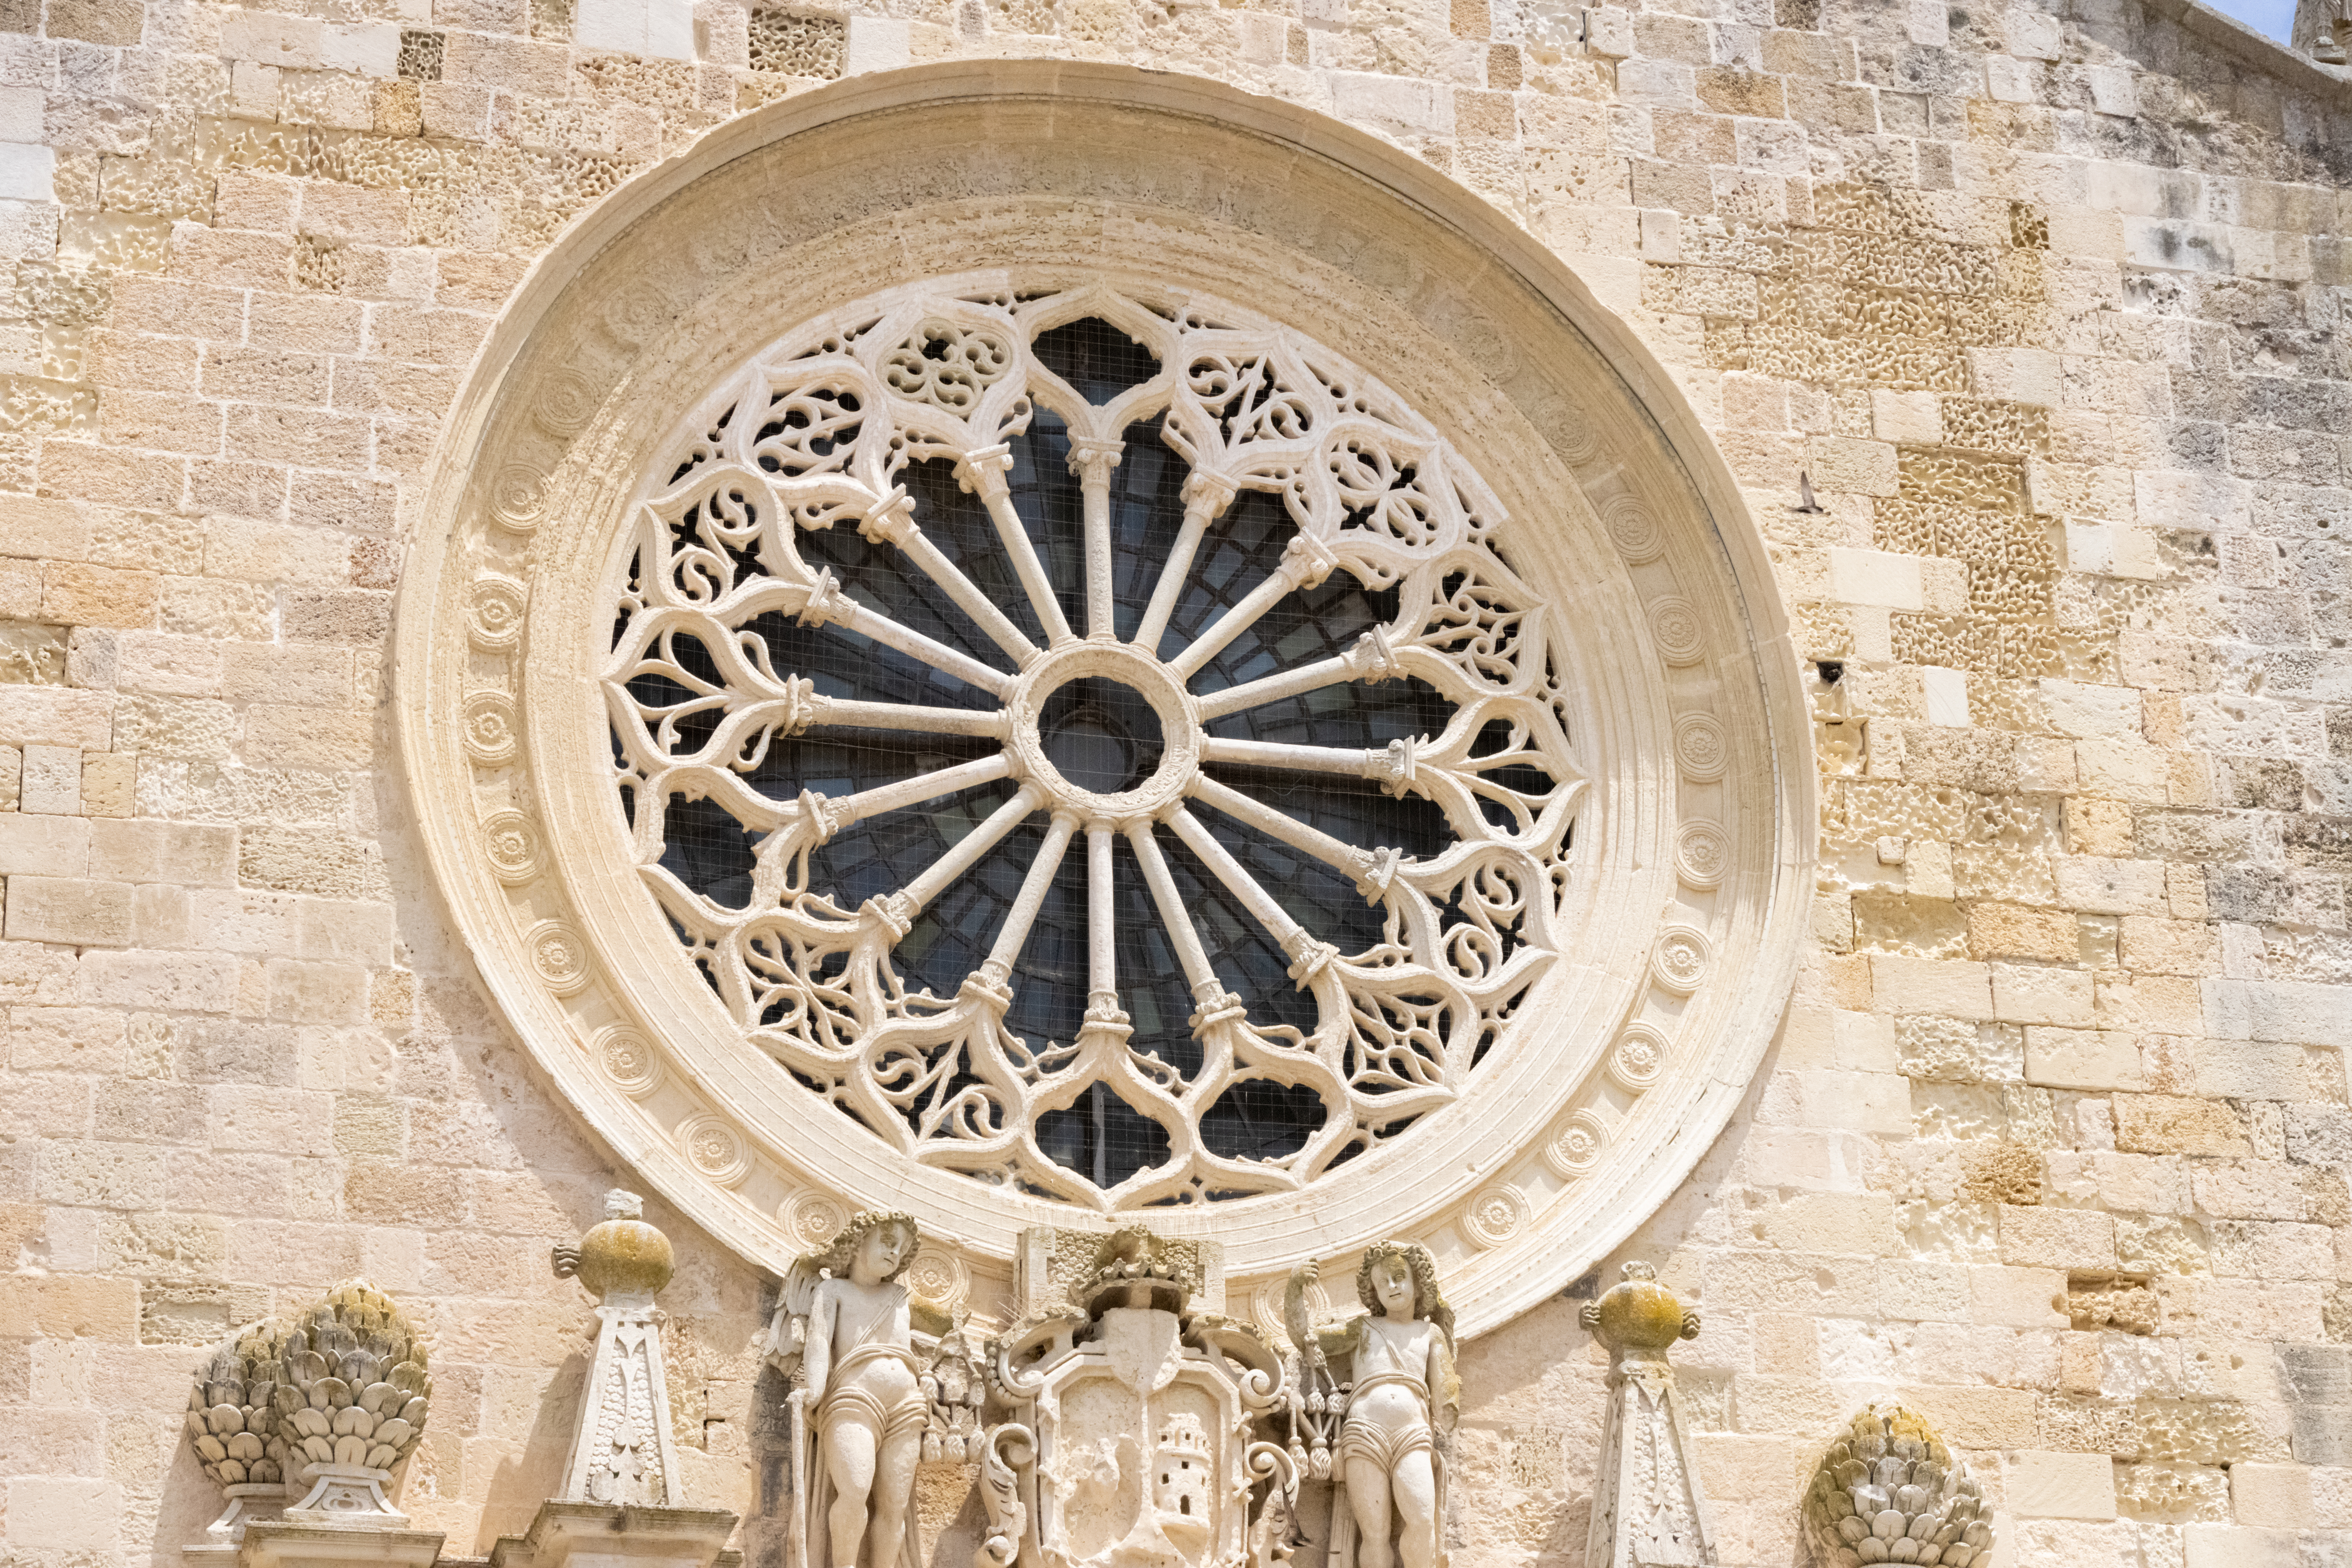 Kathedrale von Otranto